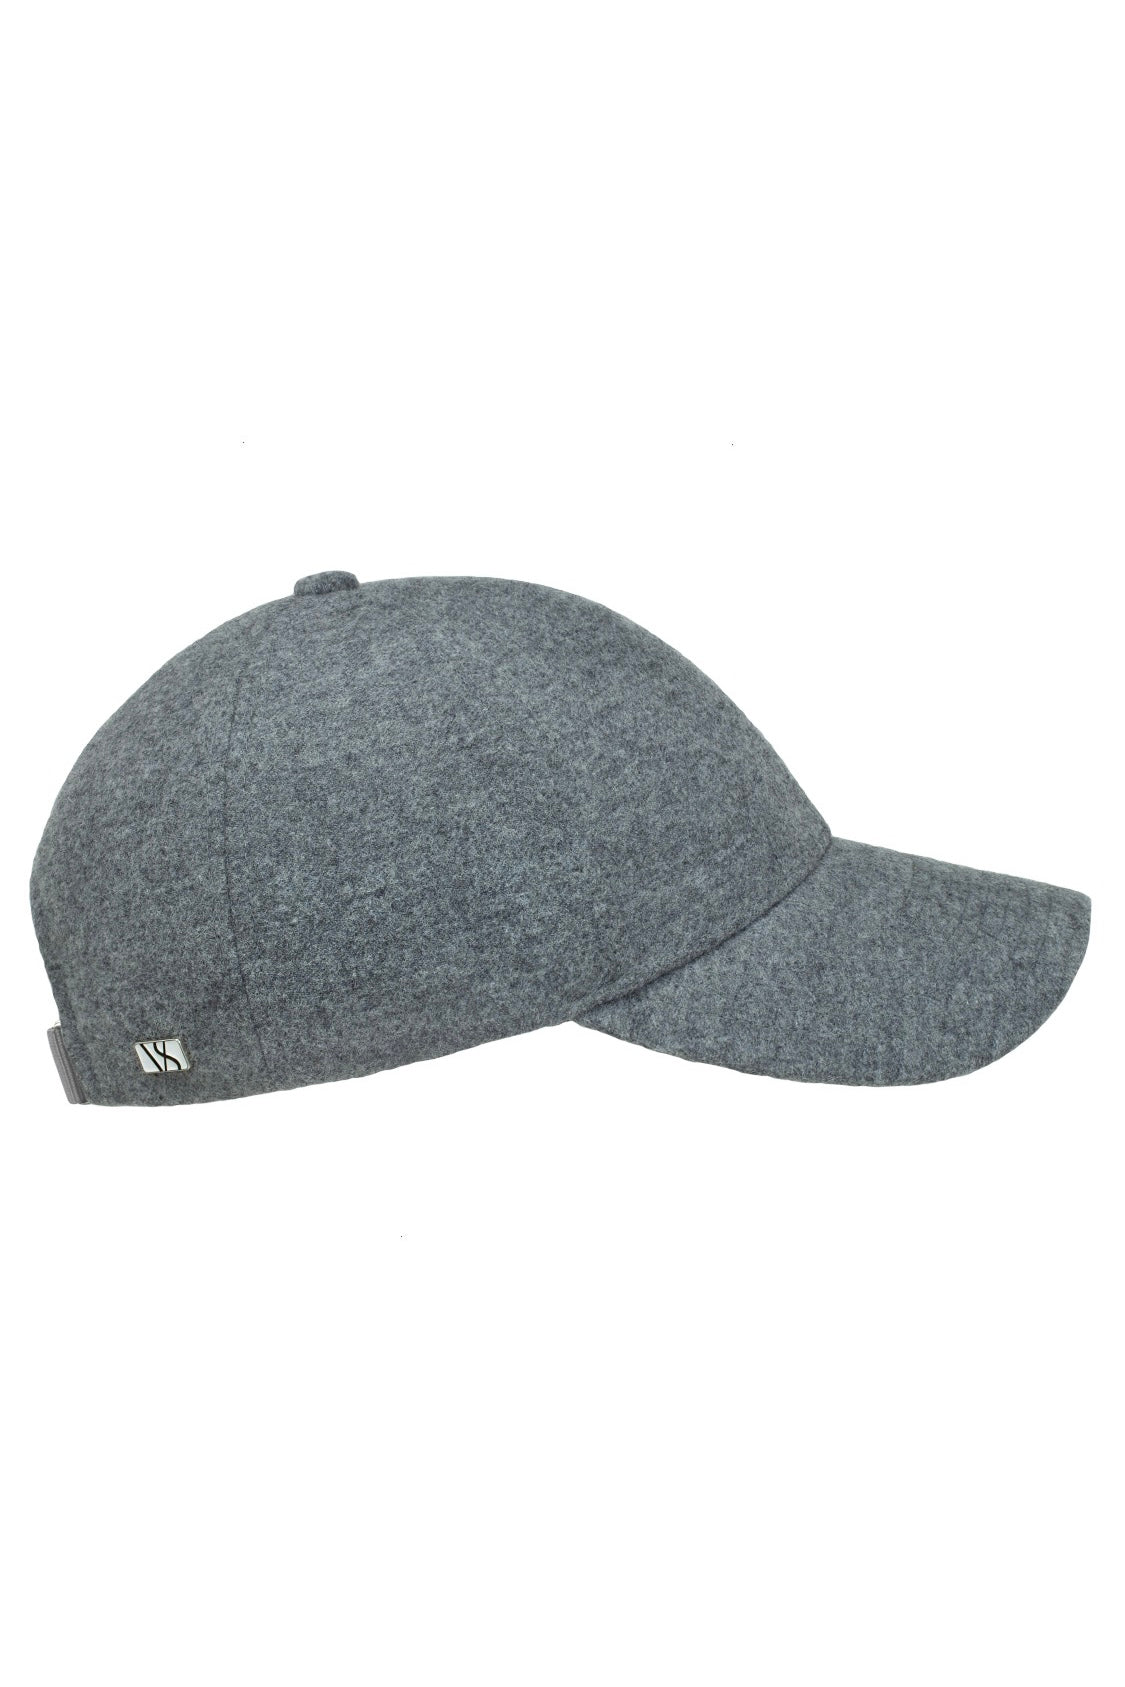 Clay Grey Wool Caps